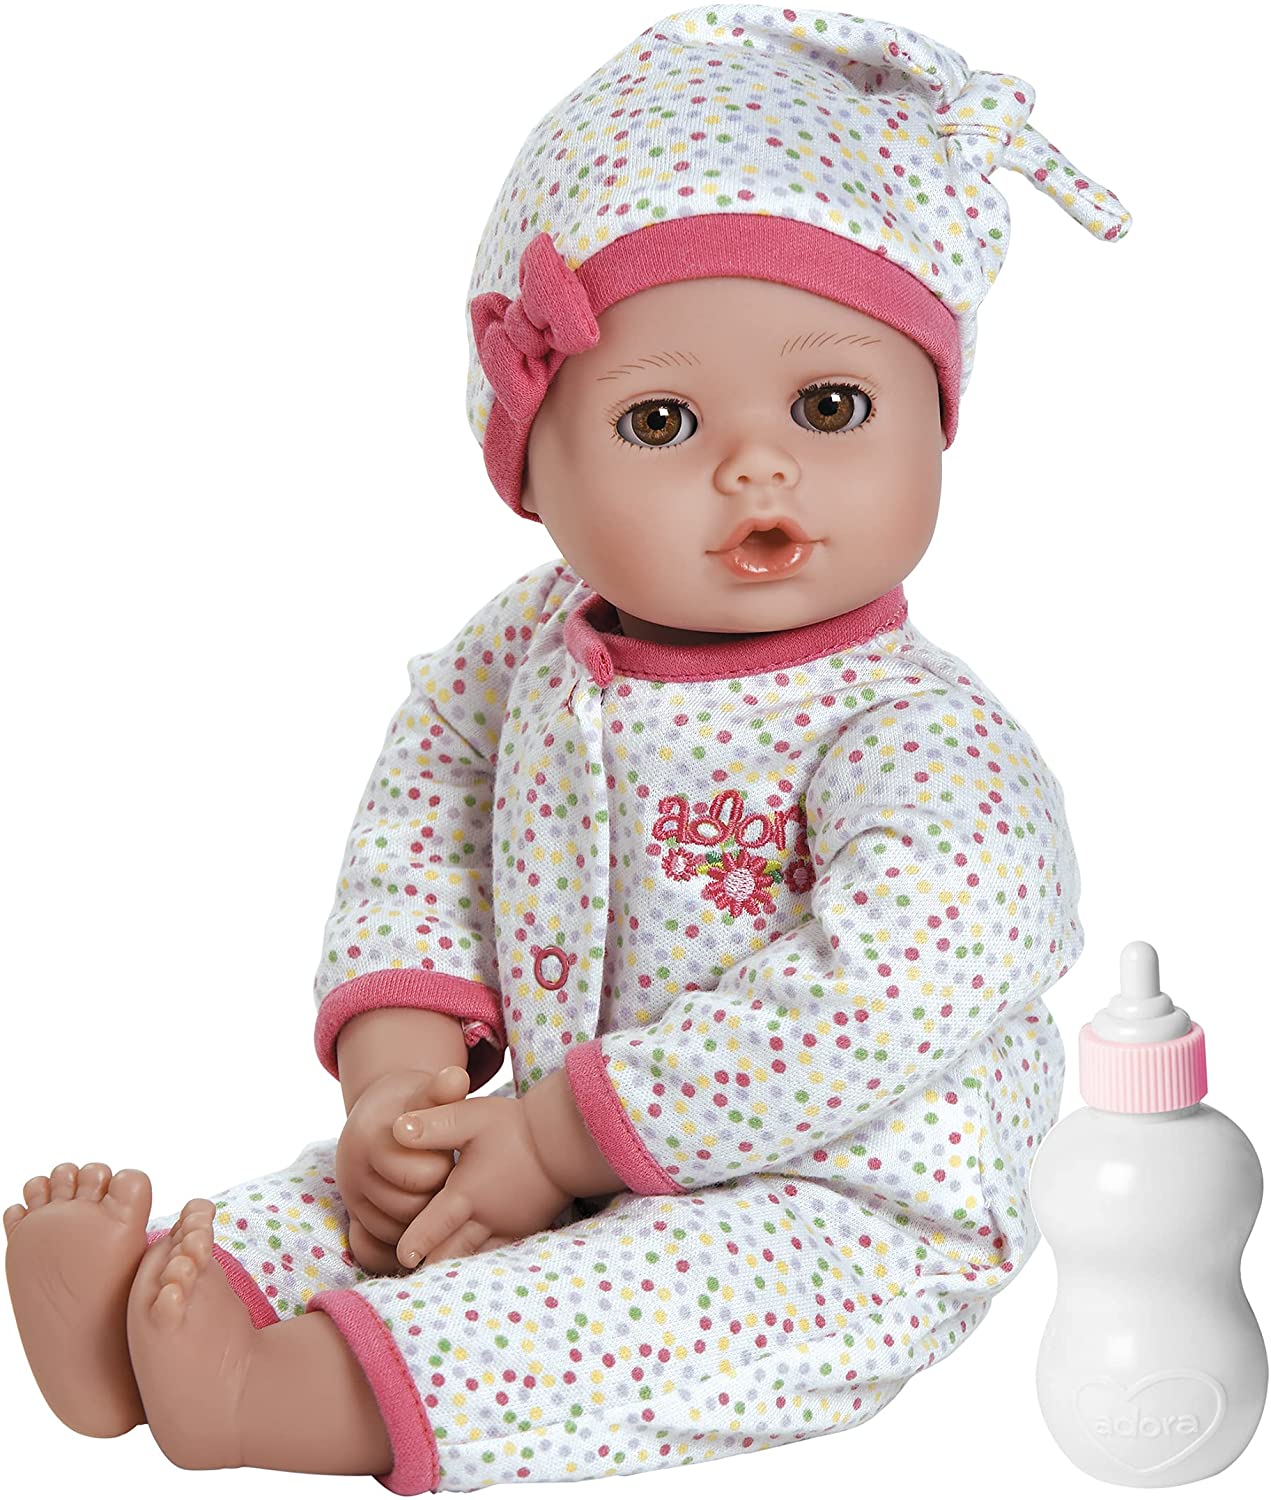 Adora Dot PlayTime Baby Doll